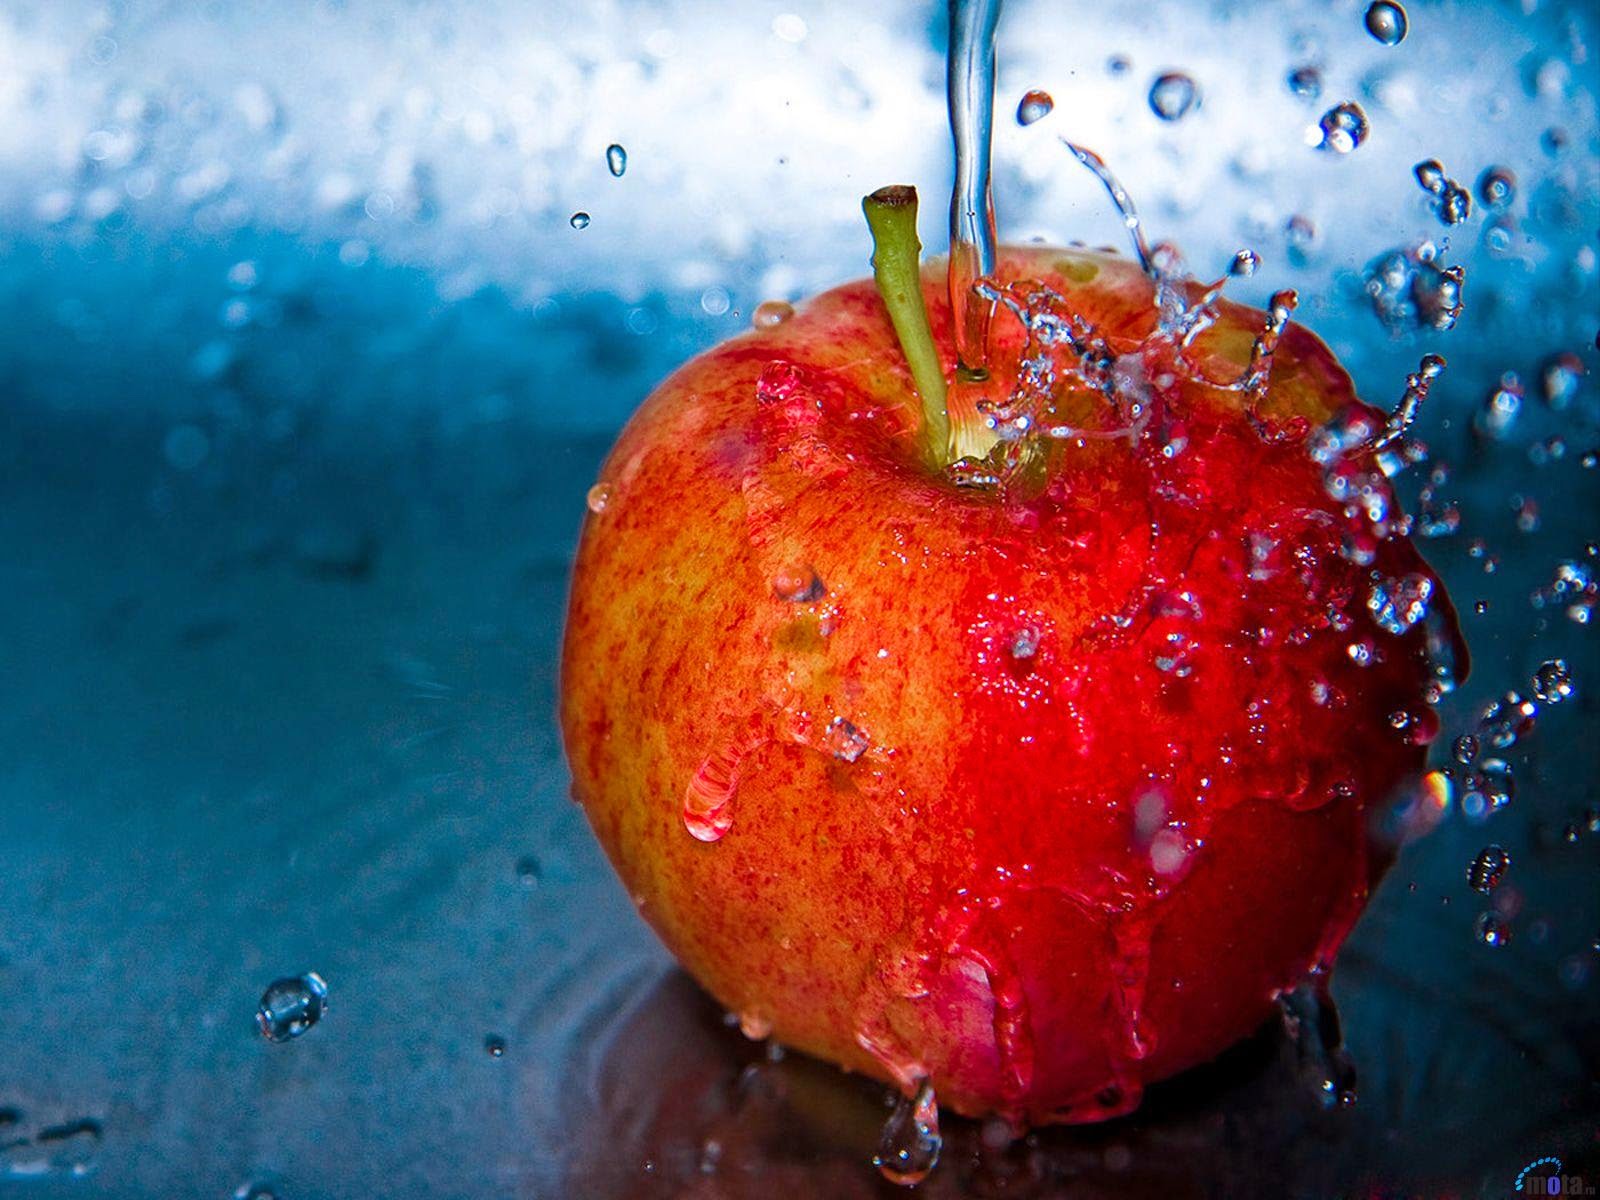 Red Apple Photography Inspiration ~ Pixekite